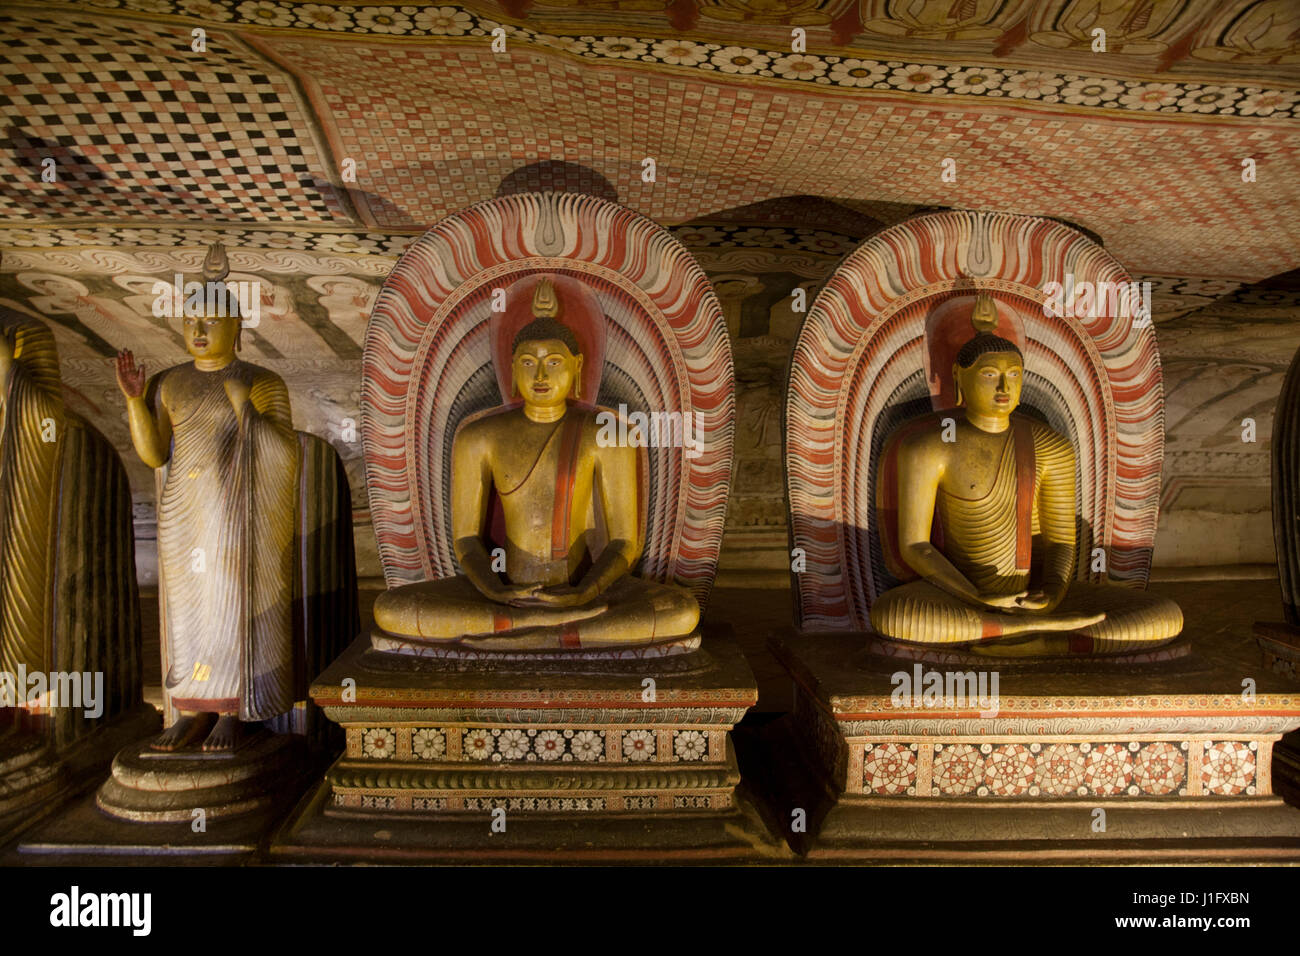 Dambulla Sri Lanka Dambulla Höhlentempel - Höhle II Maharaja Viharaya Statuen des sitzenden Buddha In Dhyana Mudra Stockfoto